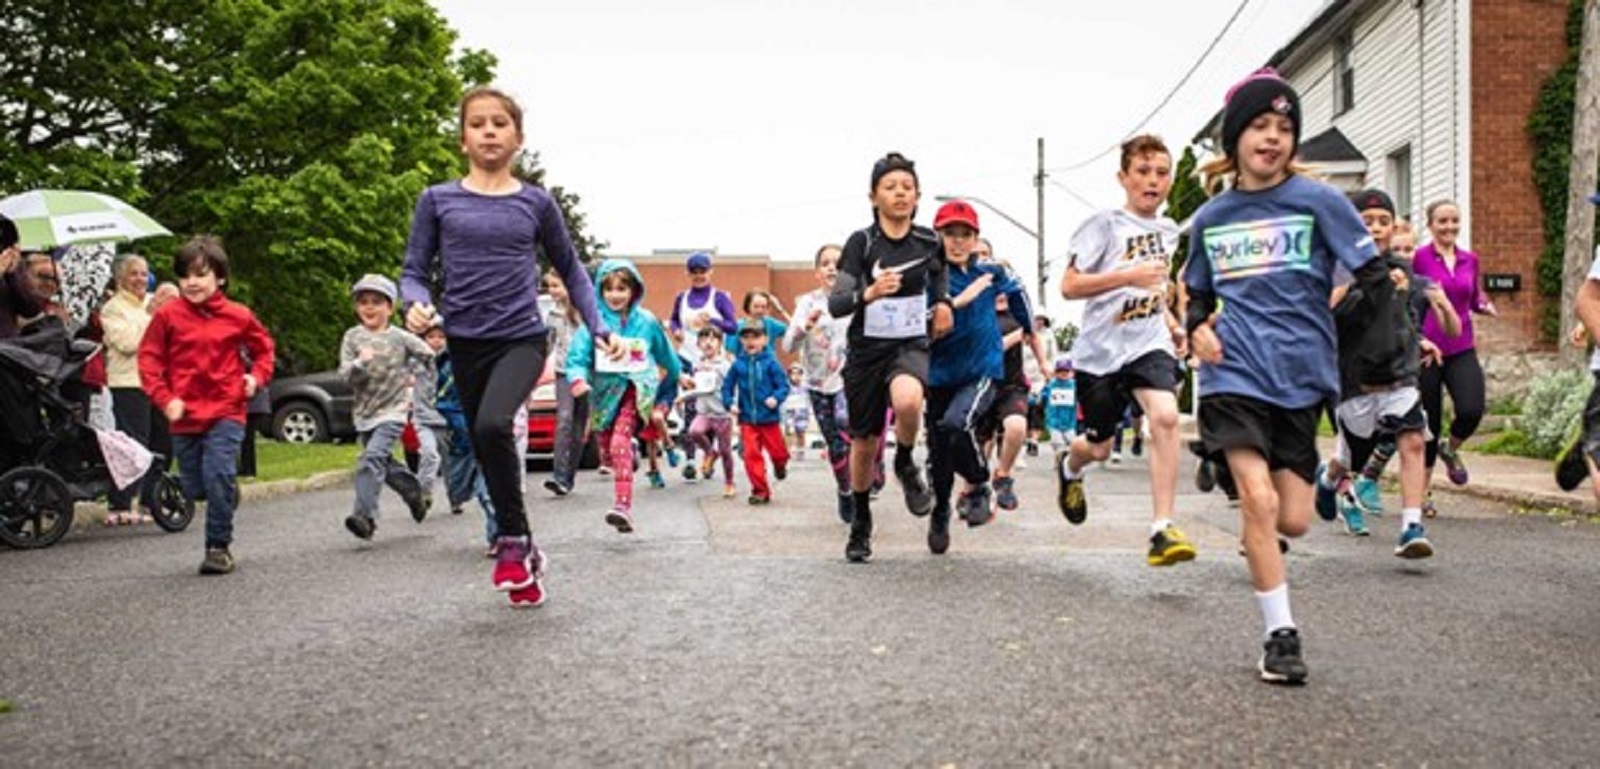 children running in race